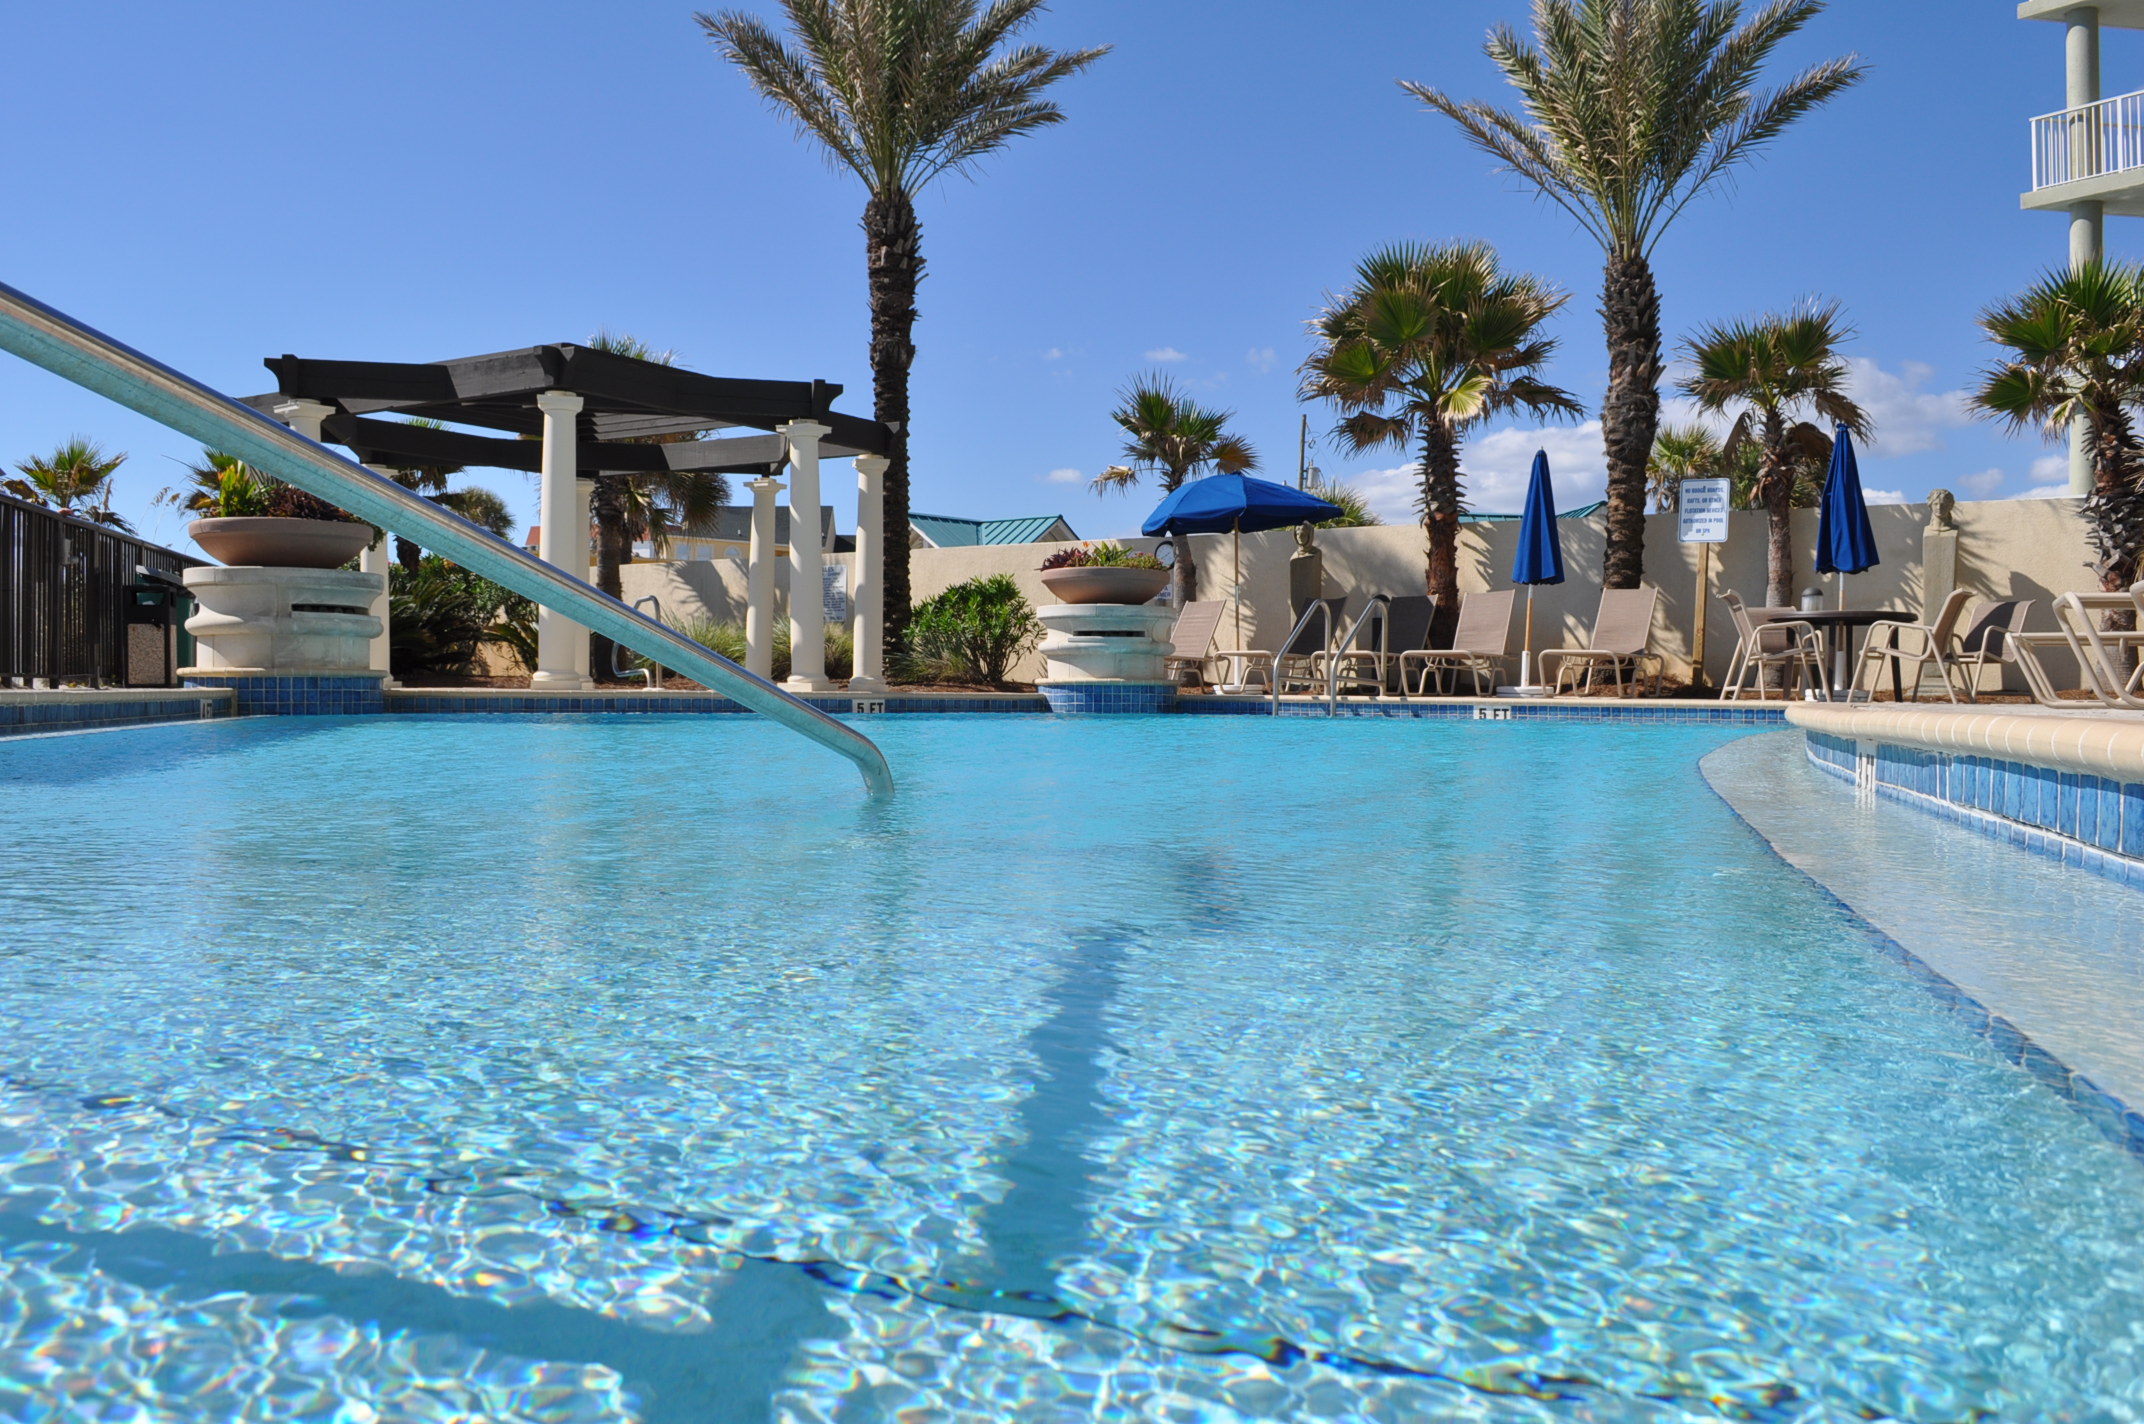 Bella Riva Resort Okaloosa Island Fort Walton Beach Destin FL Vacation Rentals by Sunset Resort Rentals